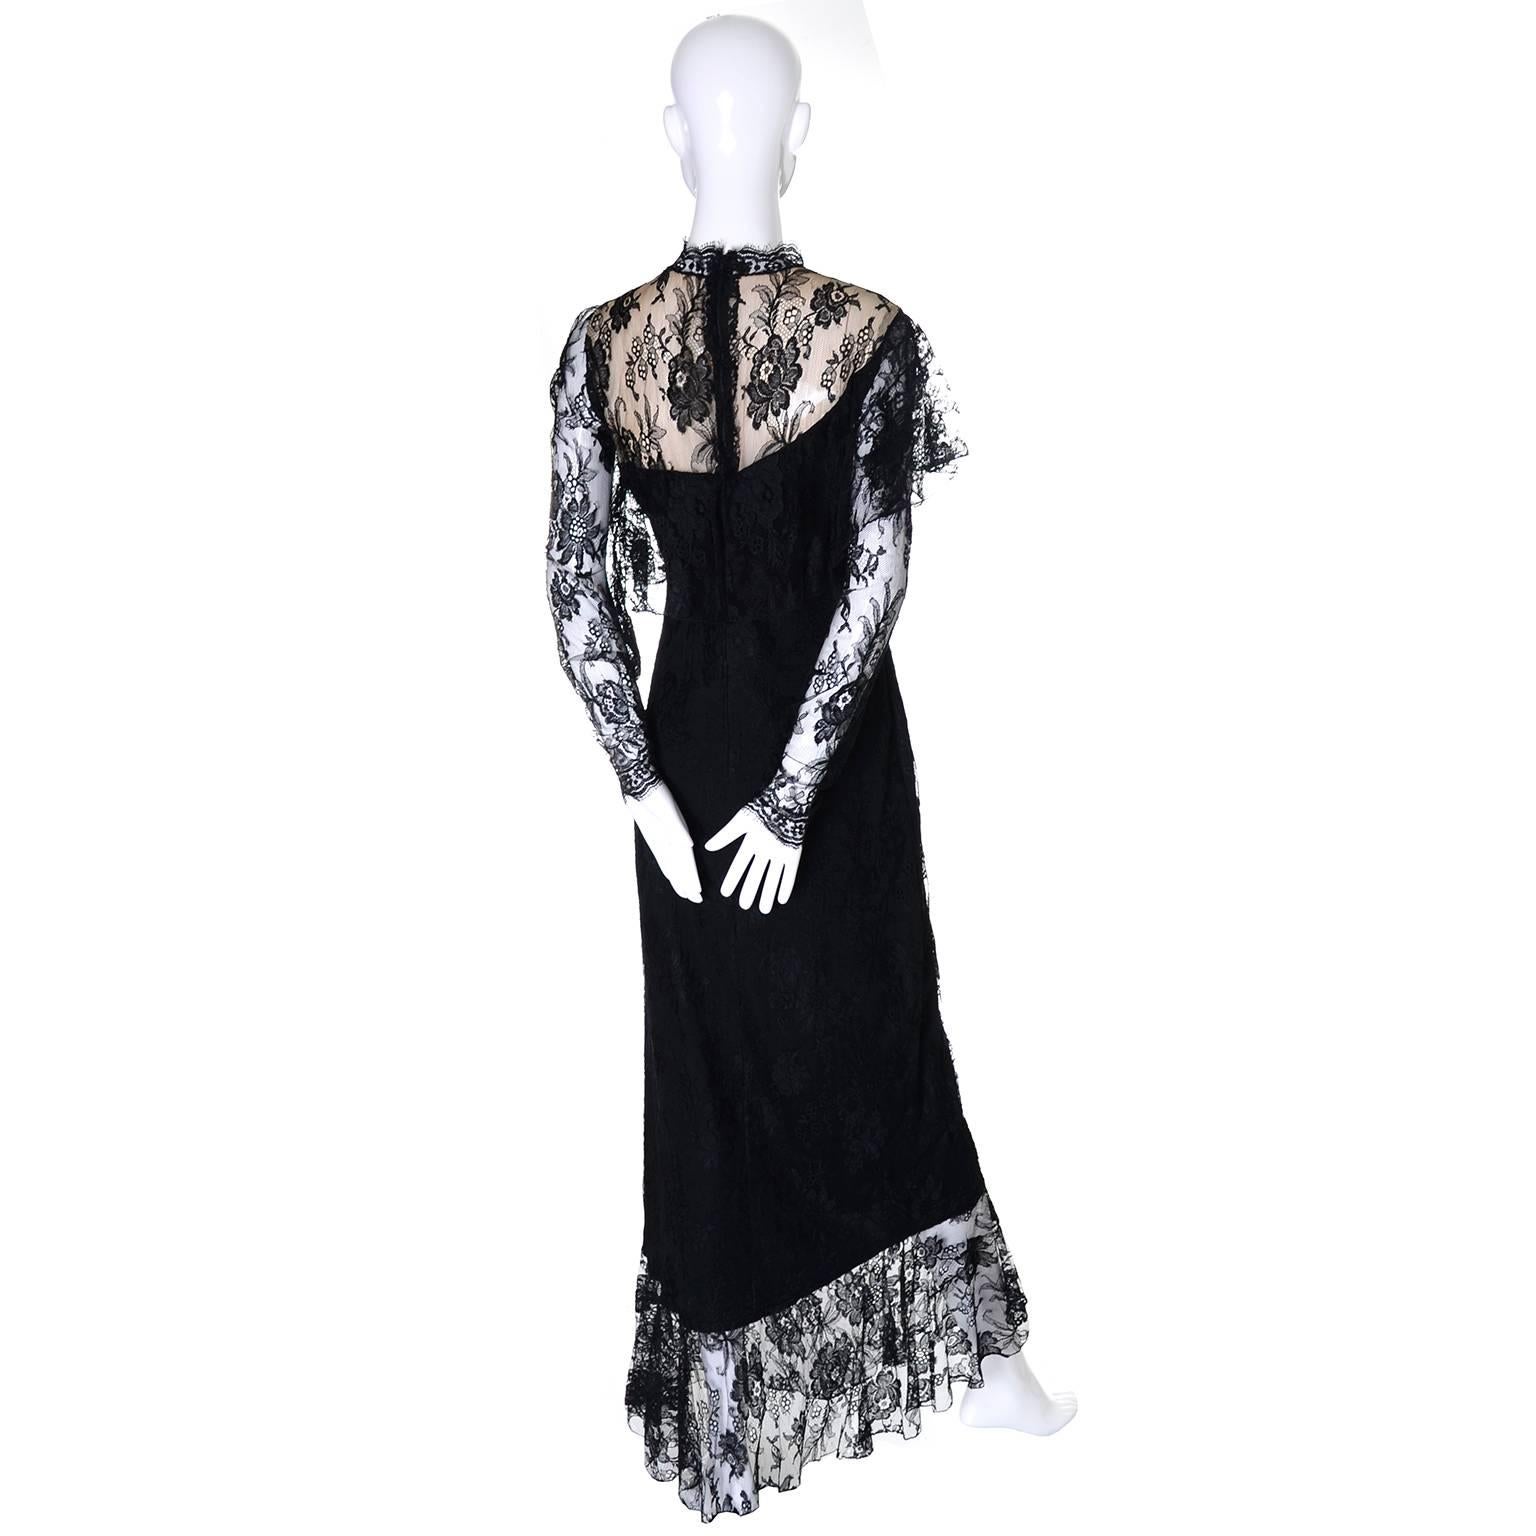 Women's Loris Azzaro Vintage Dress Black Lace Victorian Style 1980s Evening Gown France